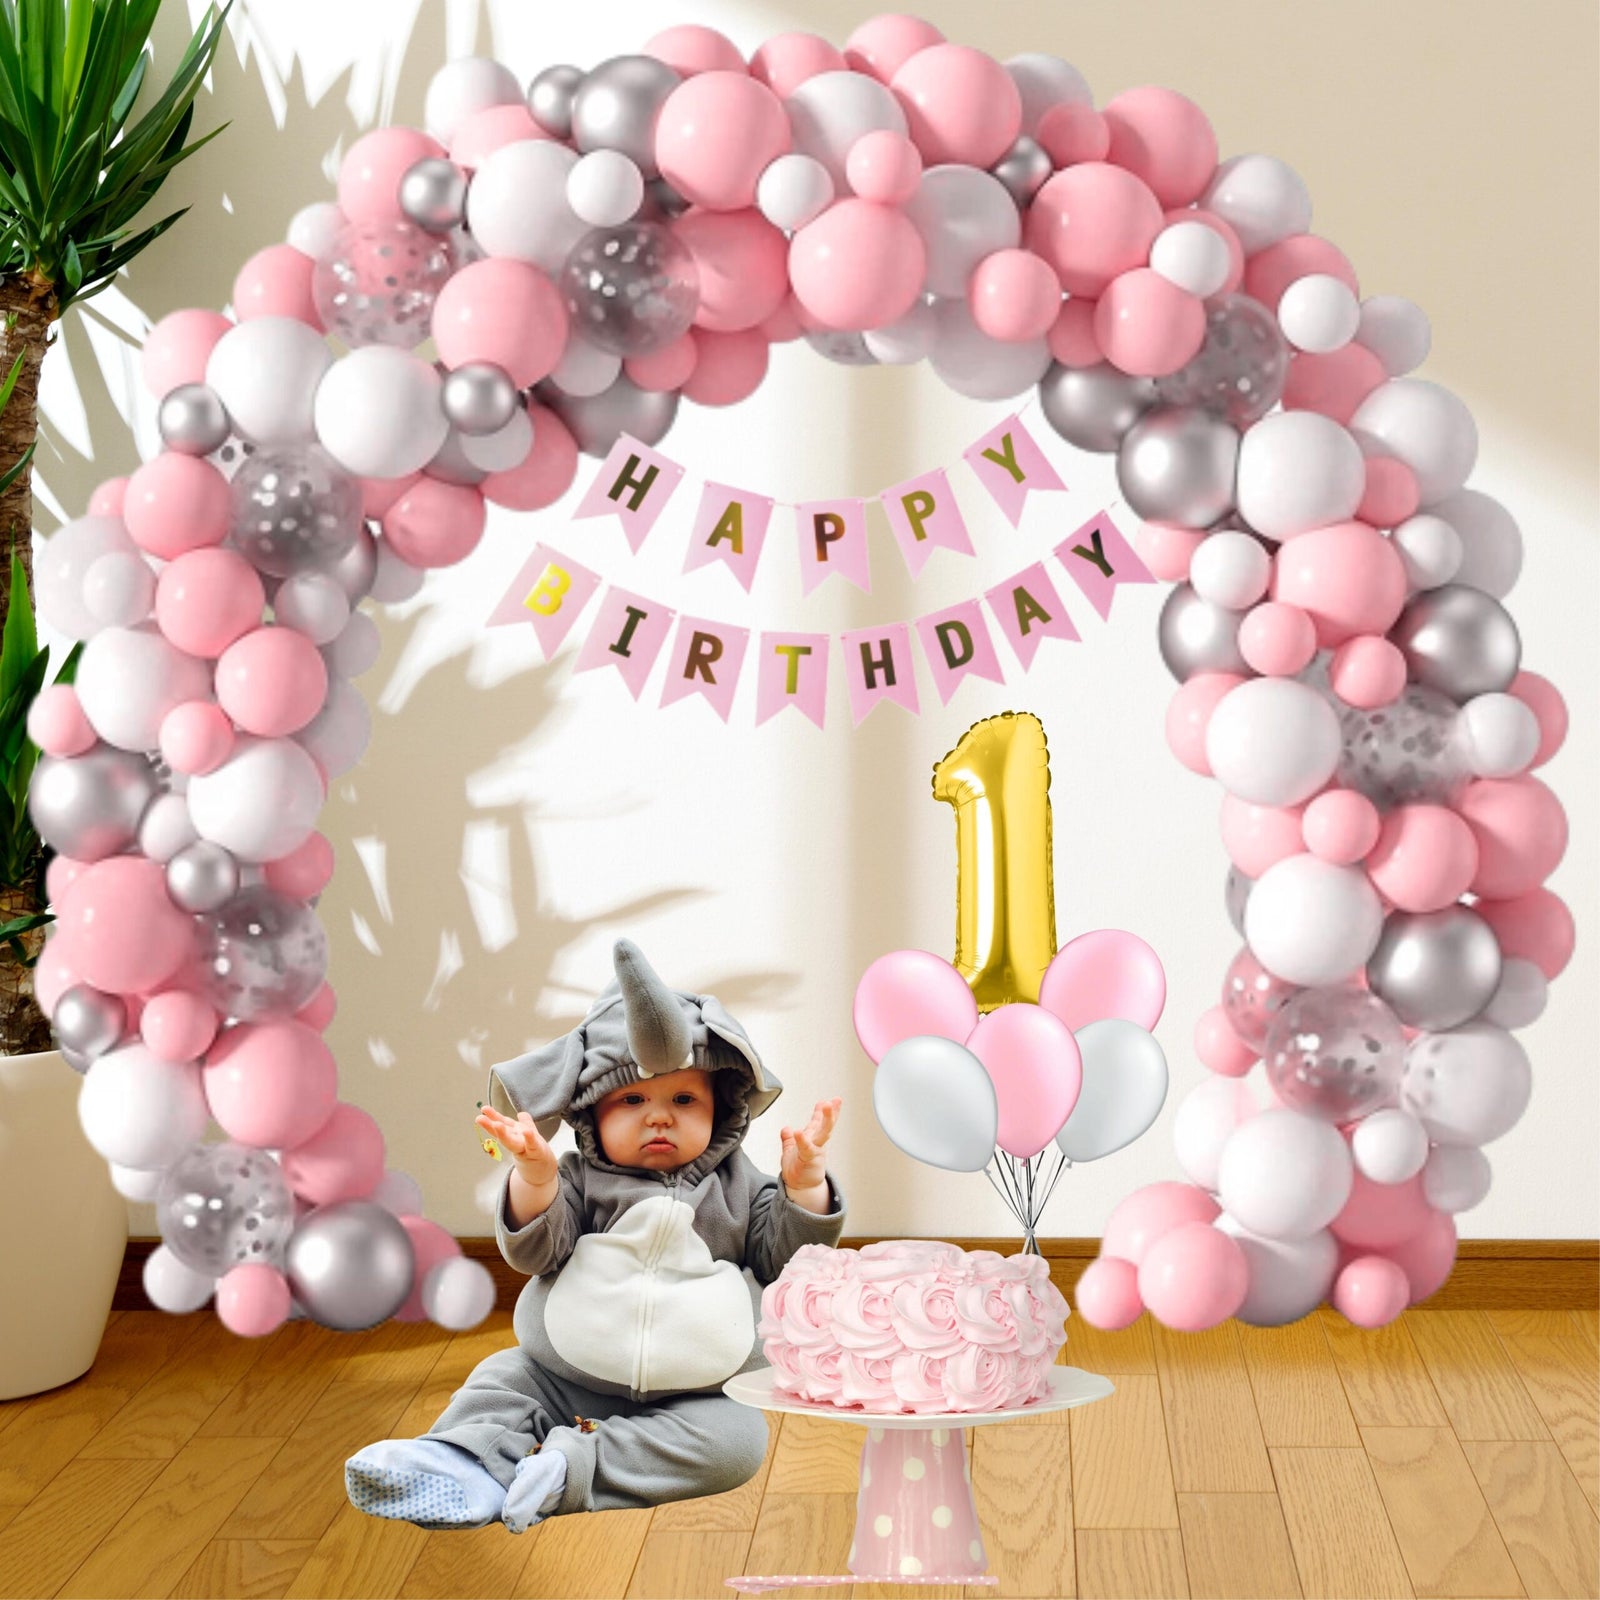 Pastel Happy Birthday Balloon